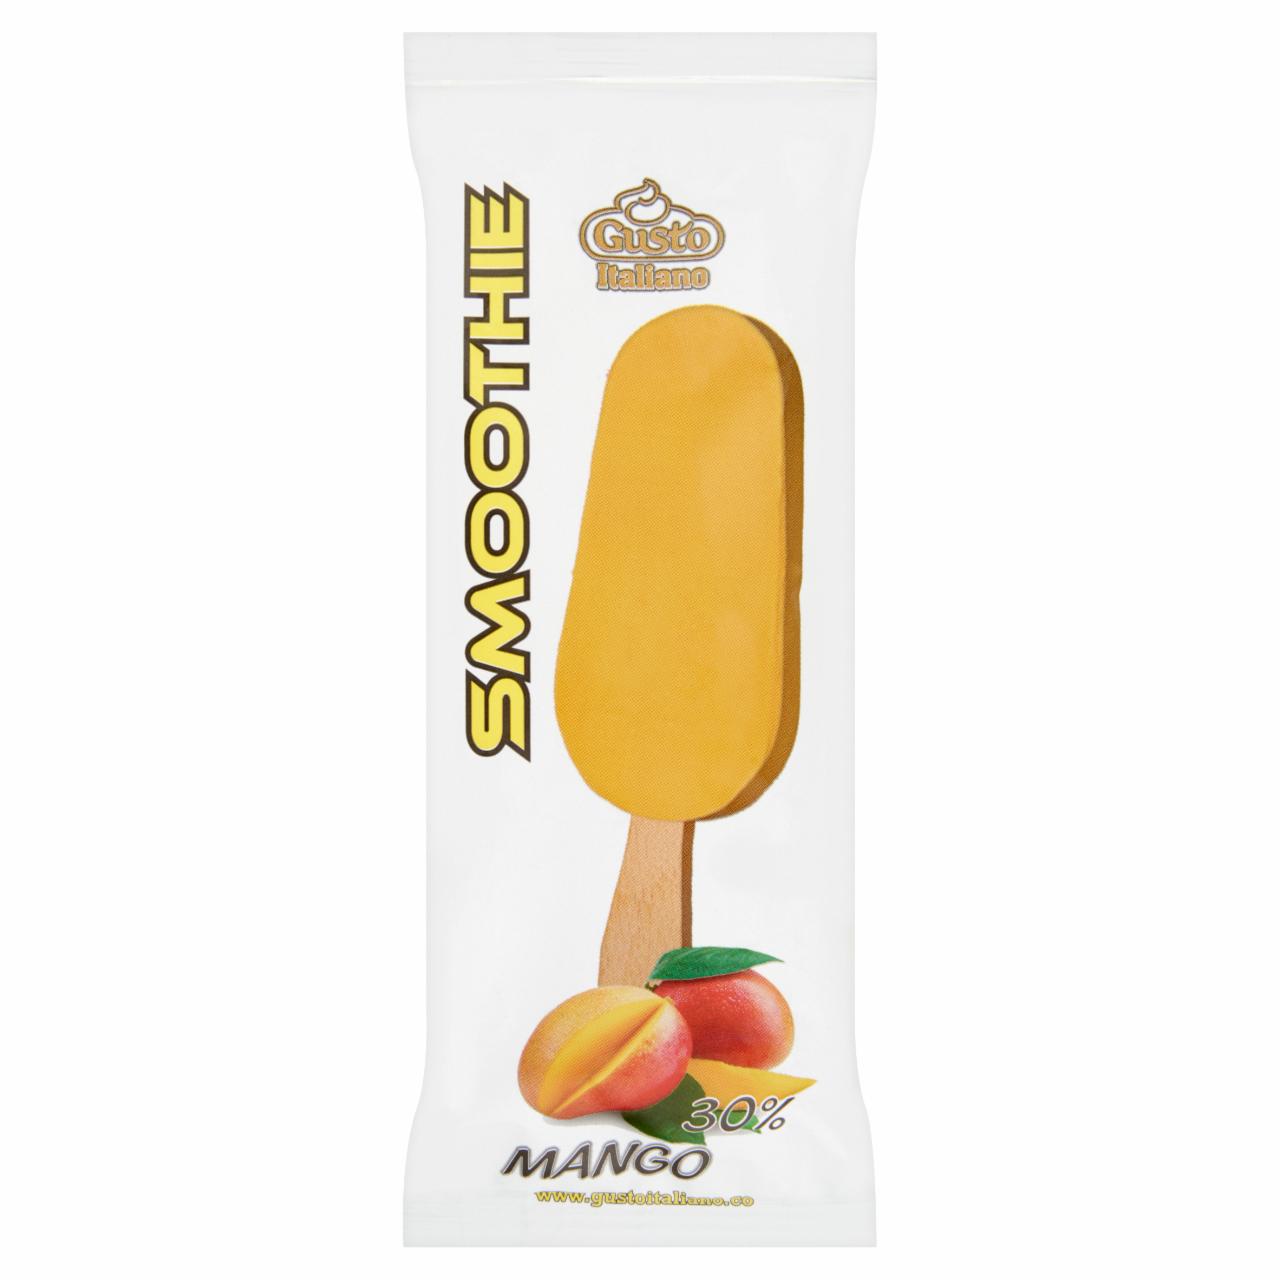 Képek - Gusto Italiano mangó smoothie 90 ml